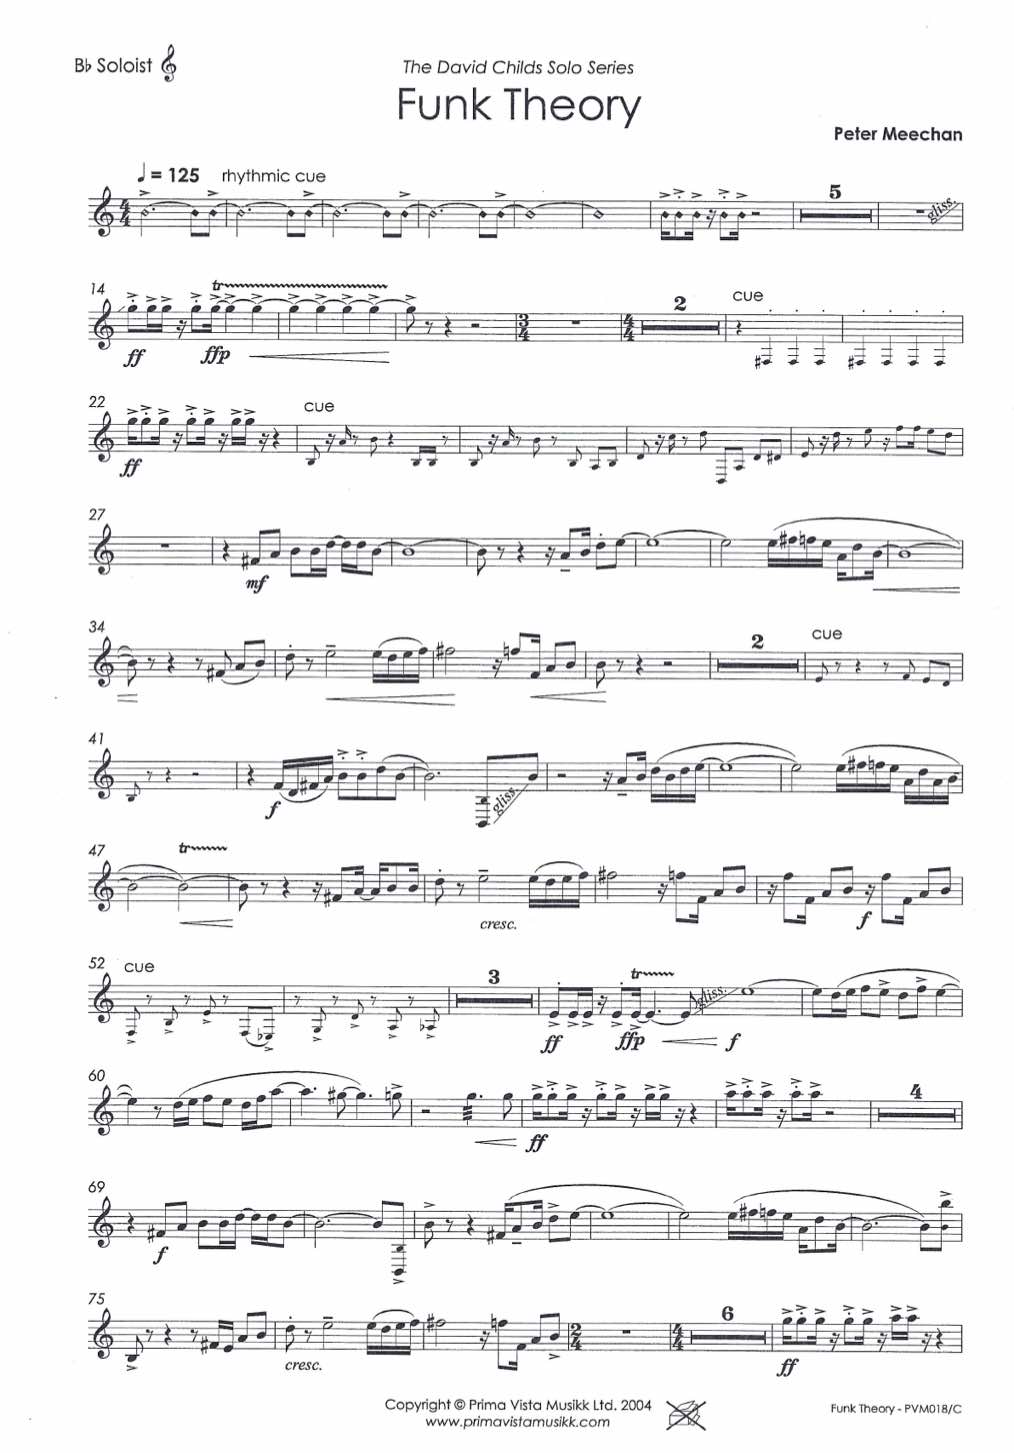 Nite Flite for Tuba and Piano (printed and shipped) - Potenza Music